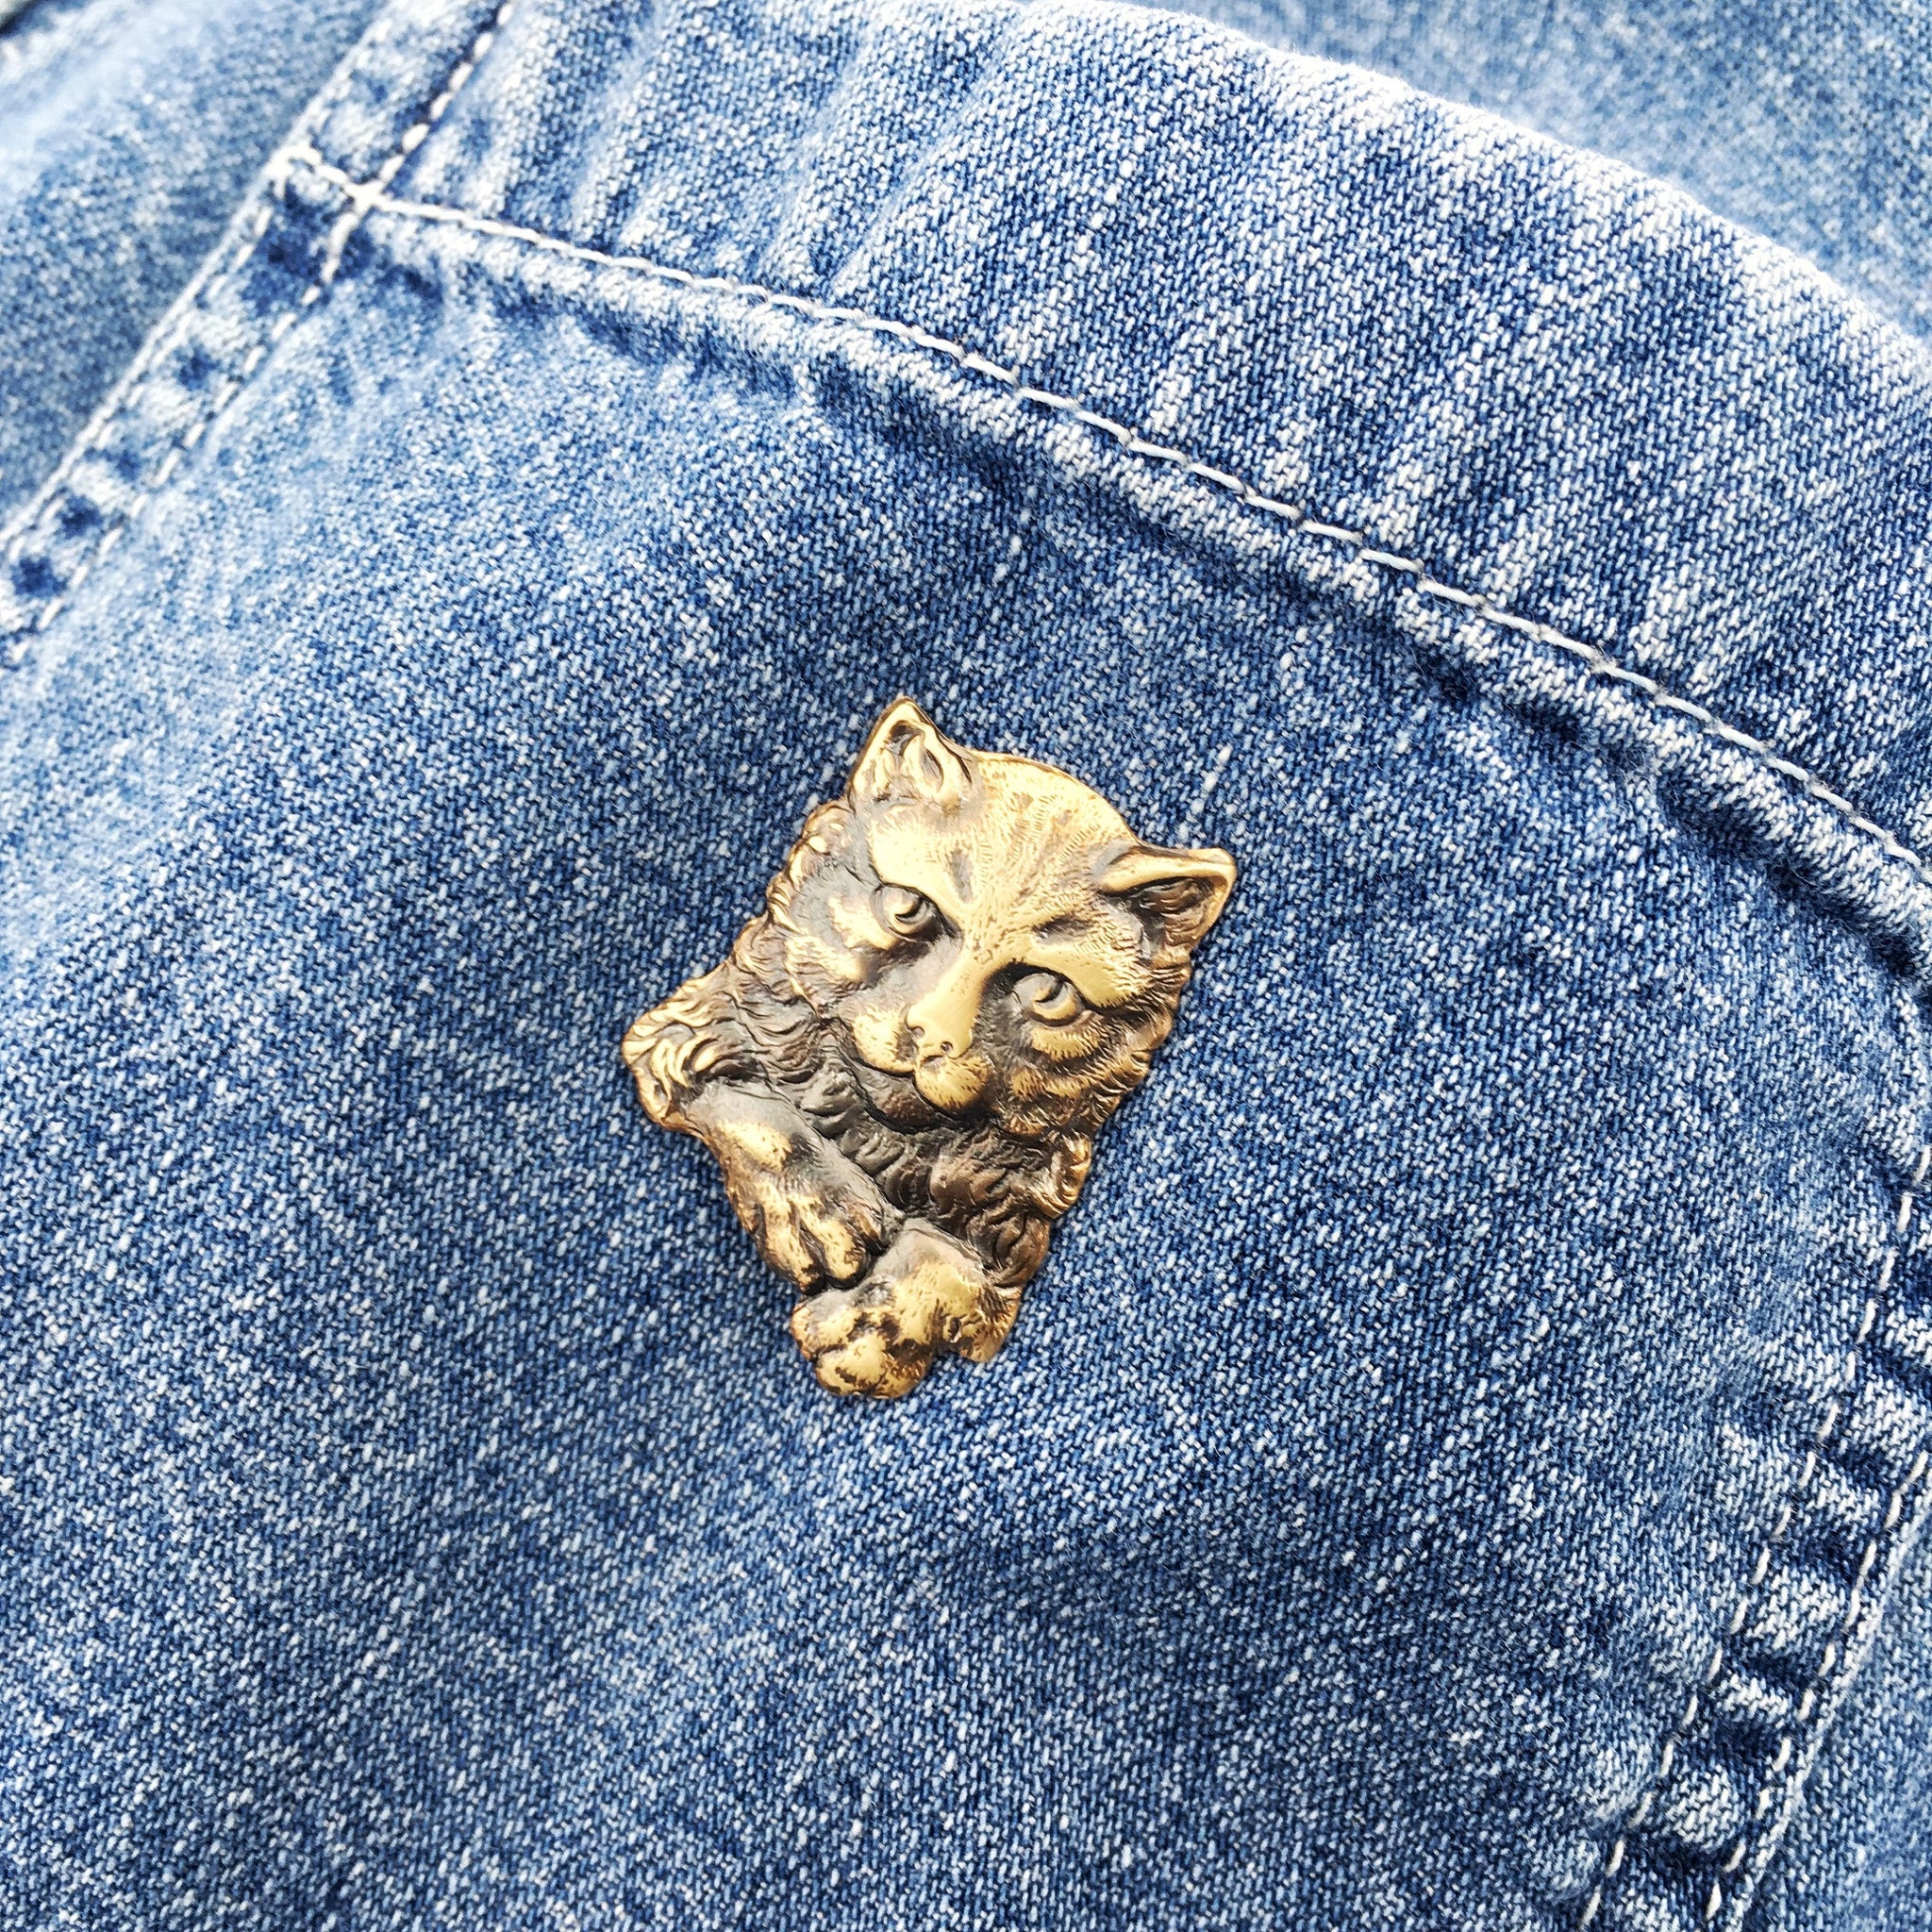 Brass Cat Pin or Brooch